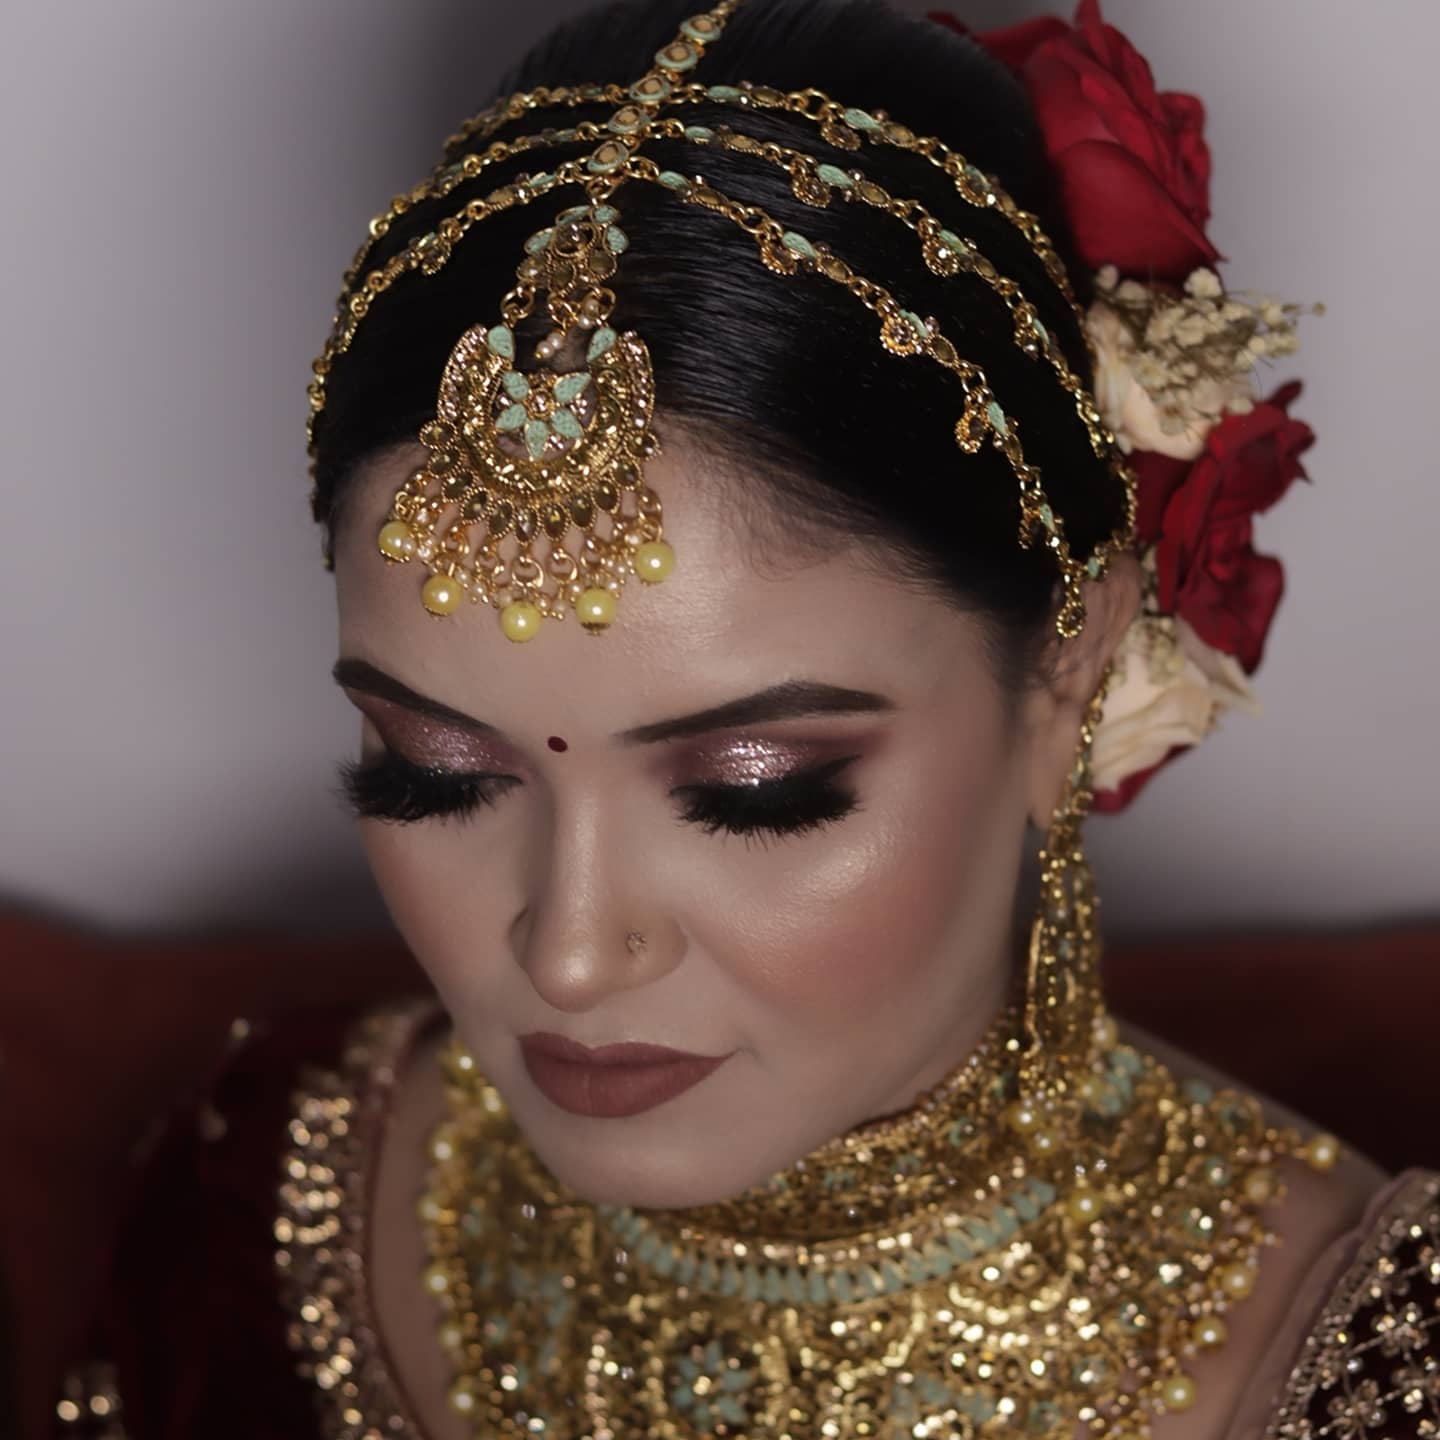 nancy-madaan-makeup-artist-delhi-ncr